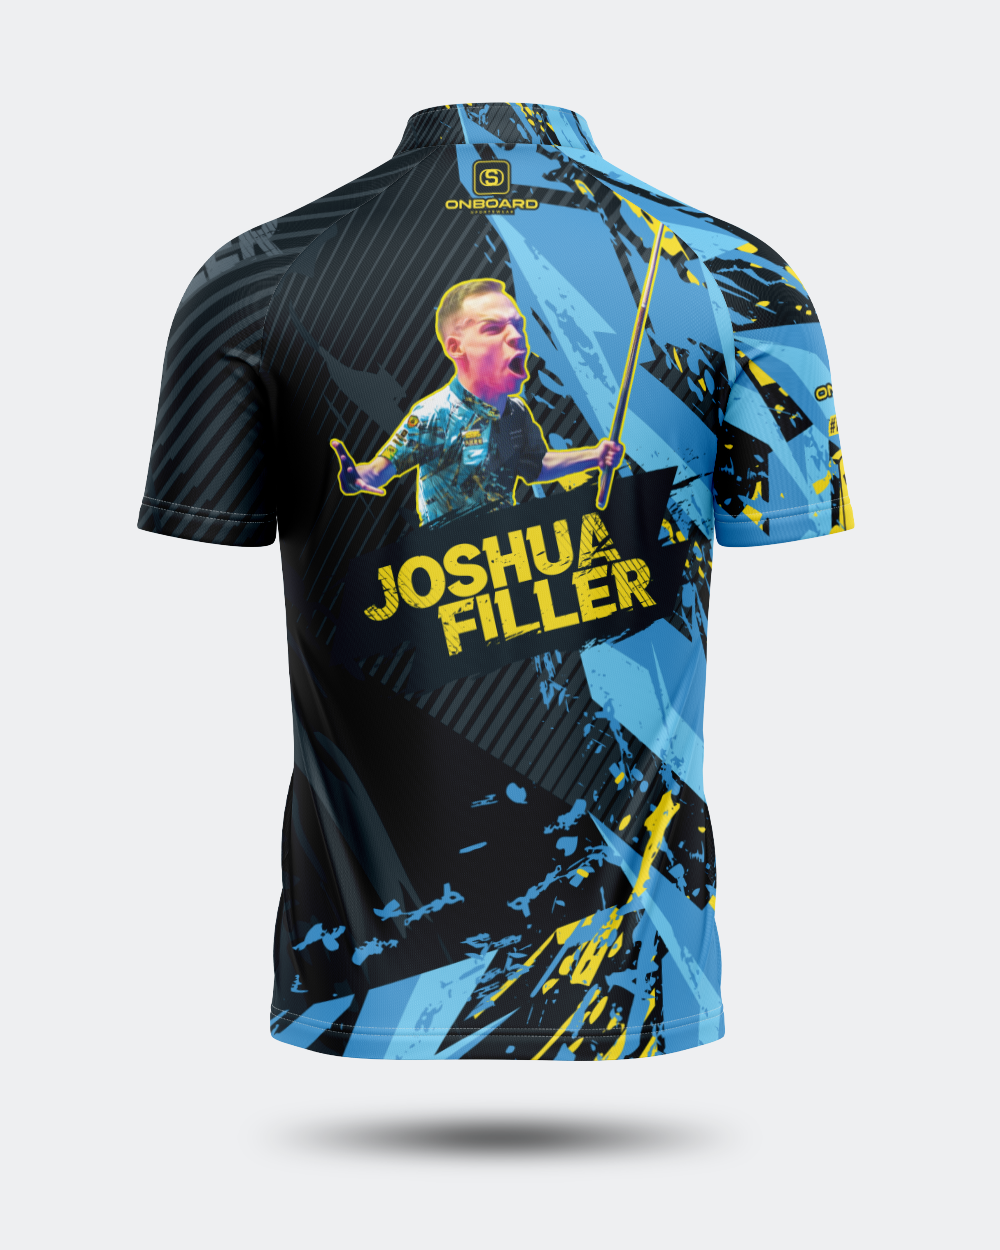 Joshua 'KillerFiller' Blue Jersey